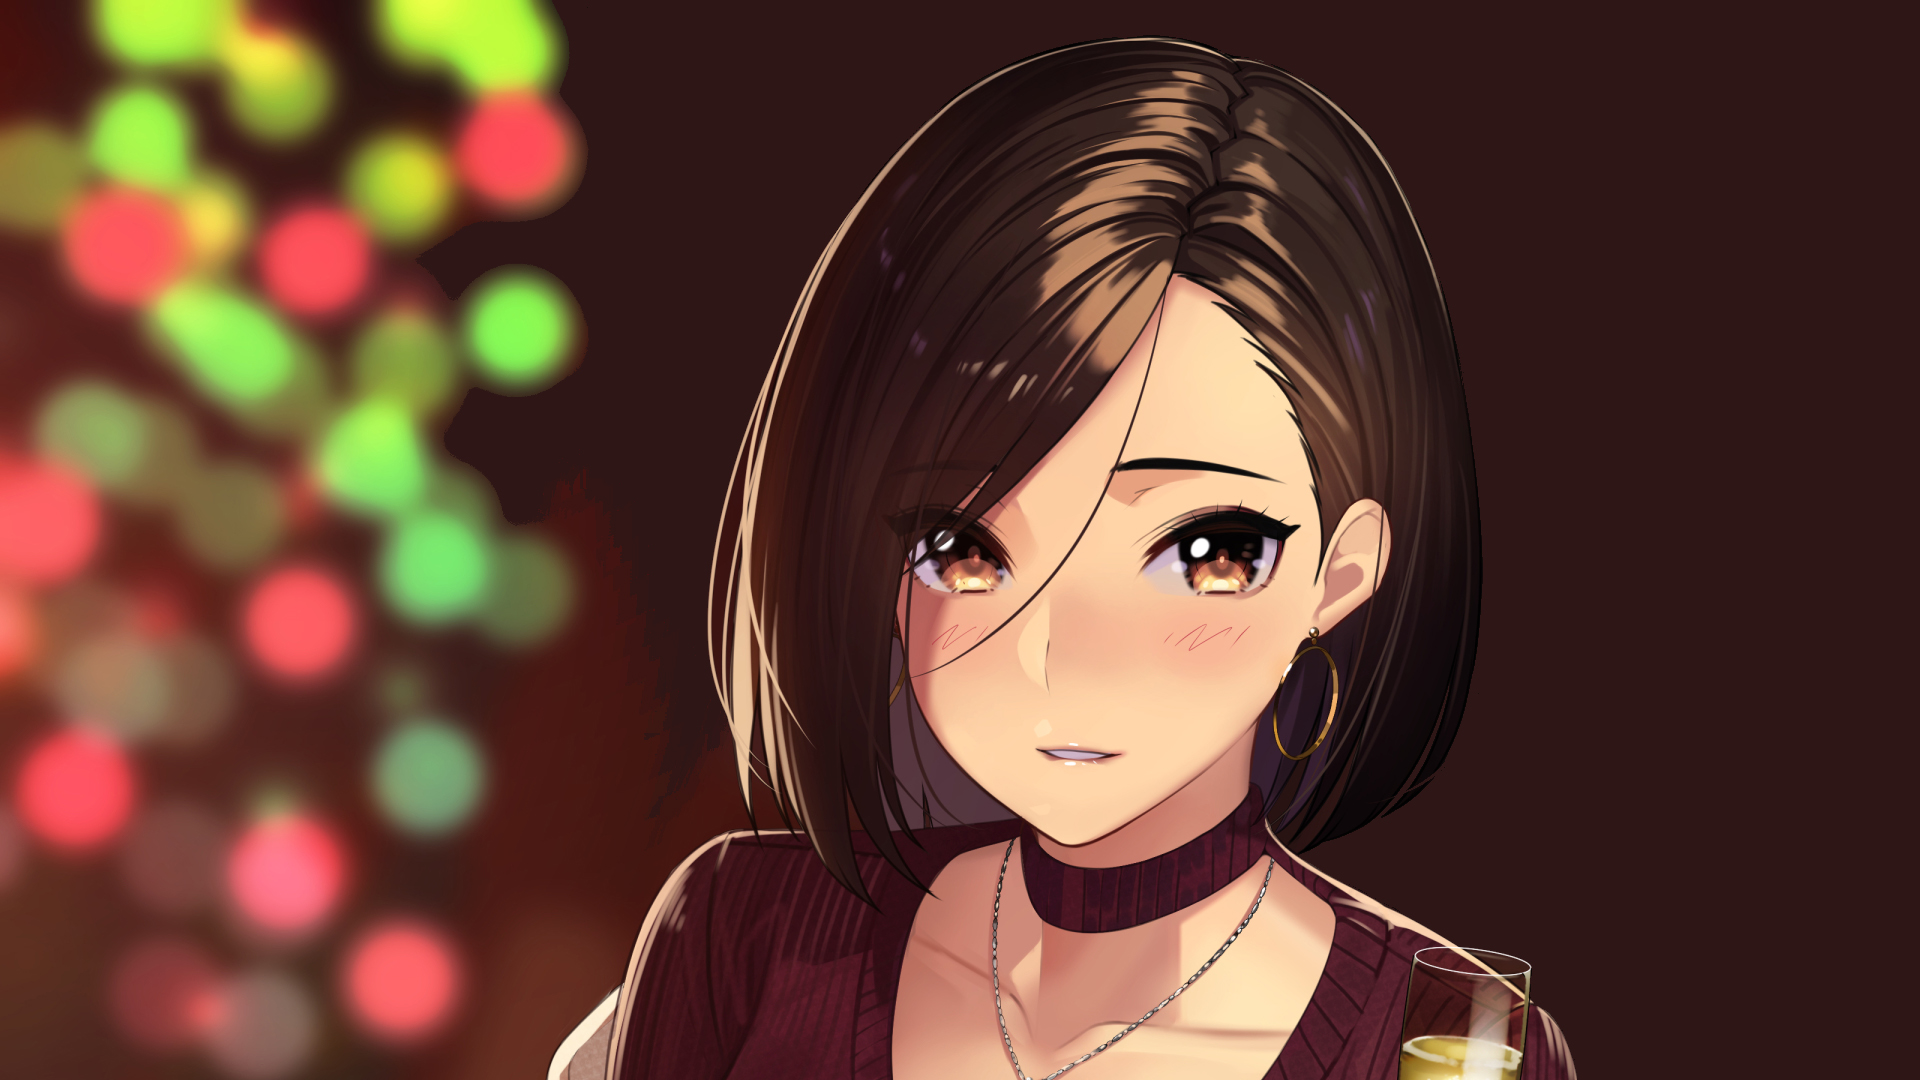 Black Short Hair Anime Girl With Brown Dress HD Anime Girl Wallpaper